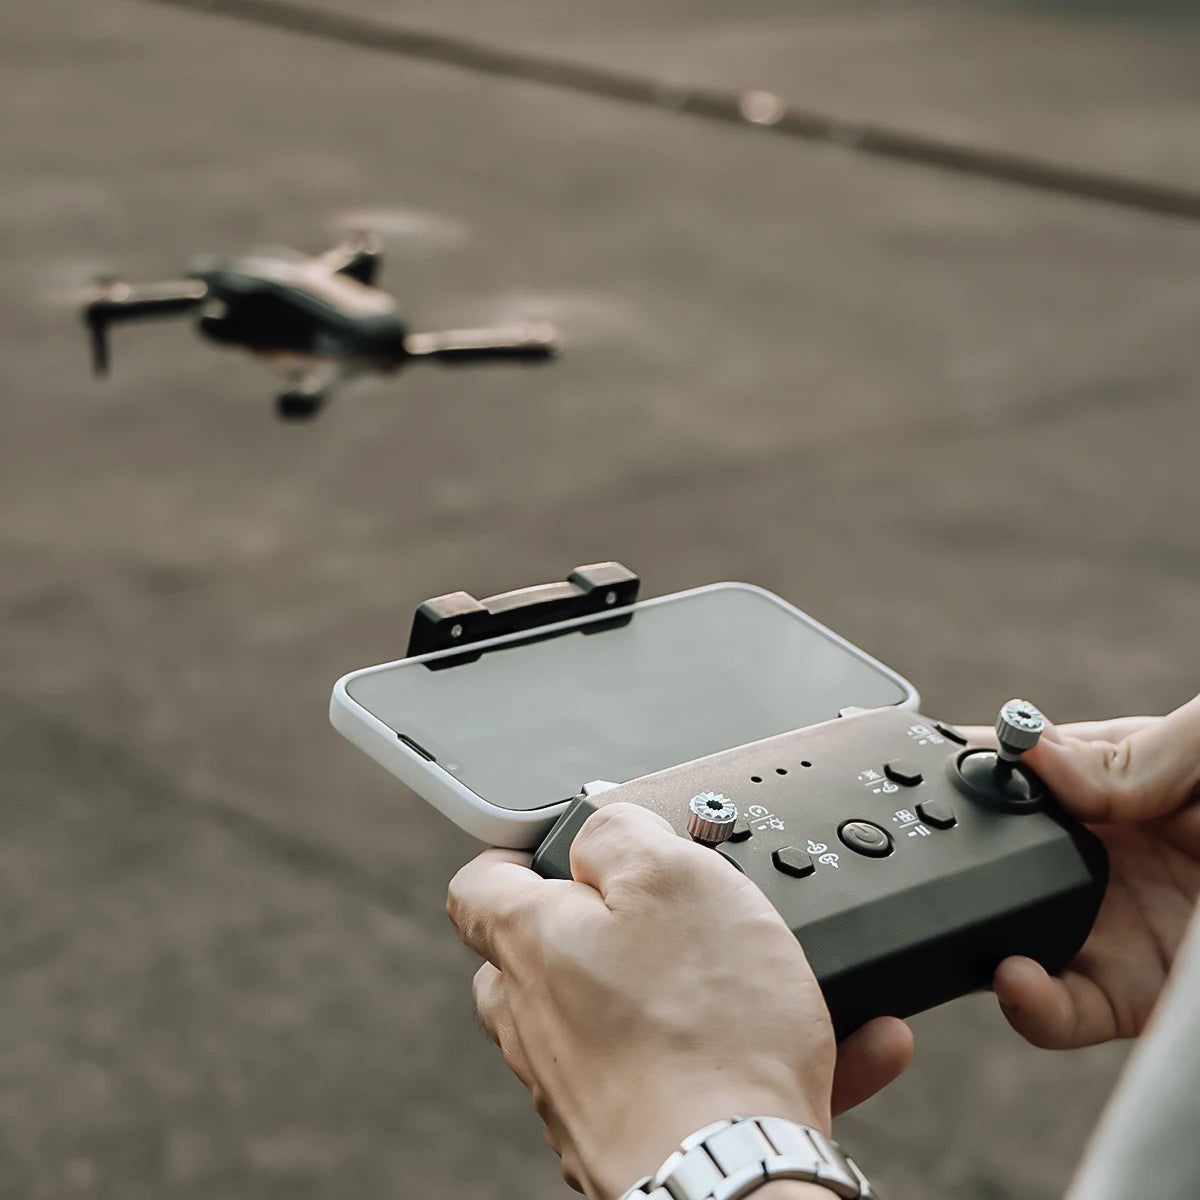 Z908 Pro Drone, remote control distance (no interference): 200m